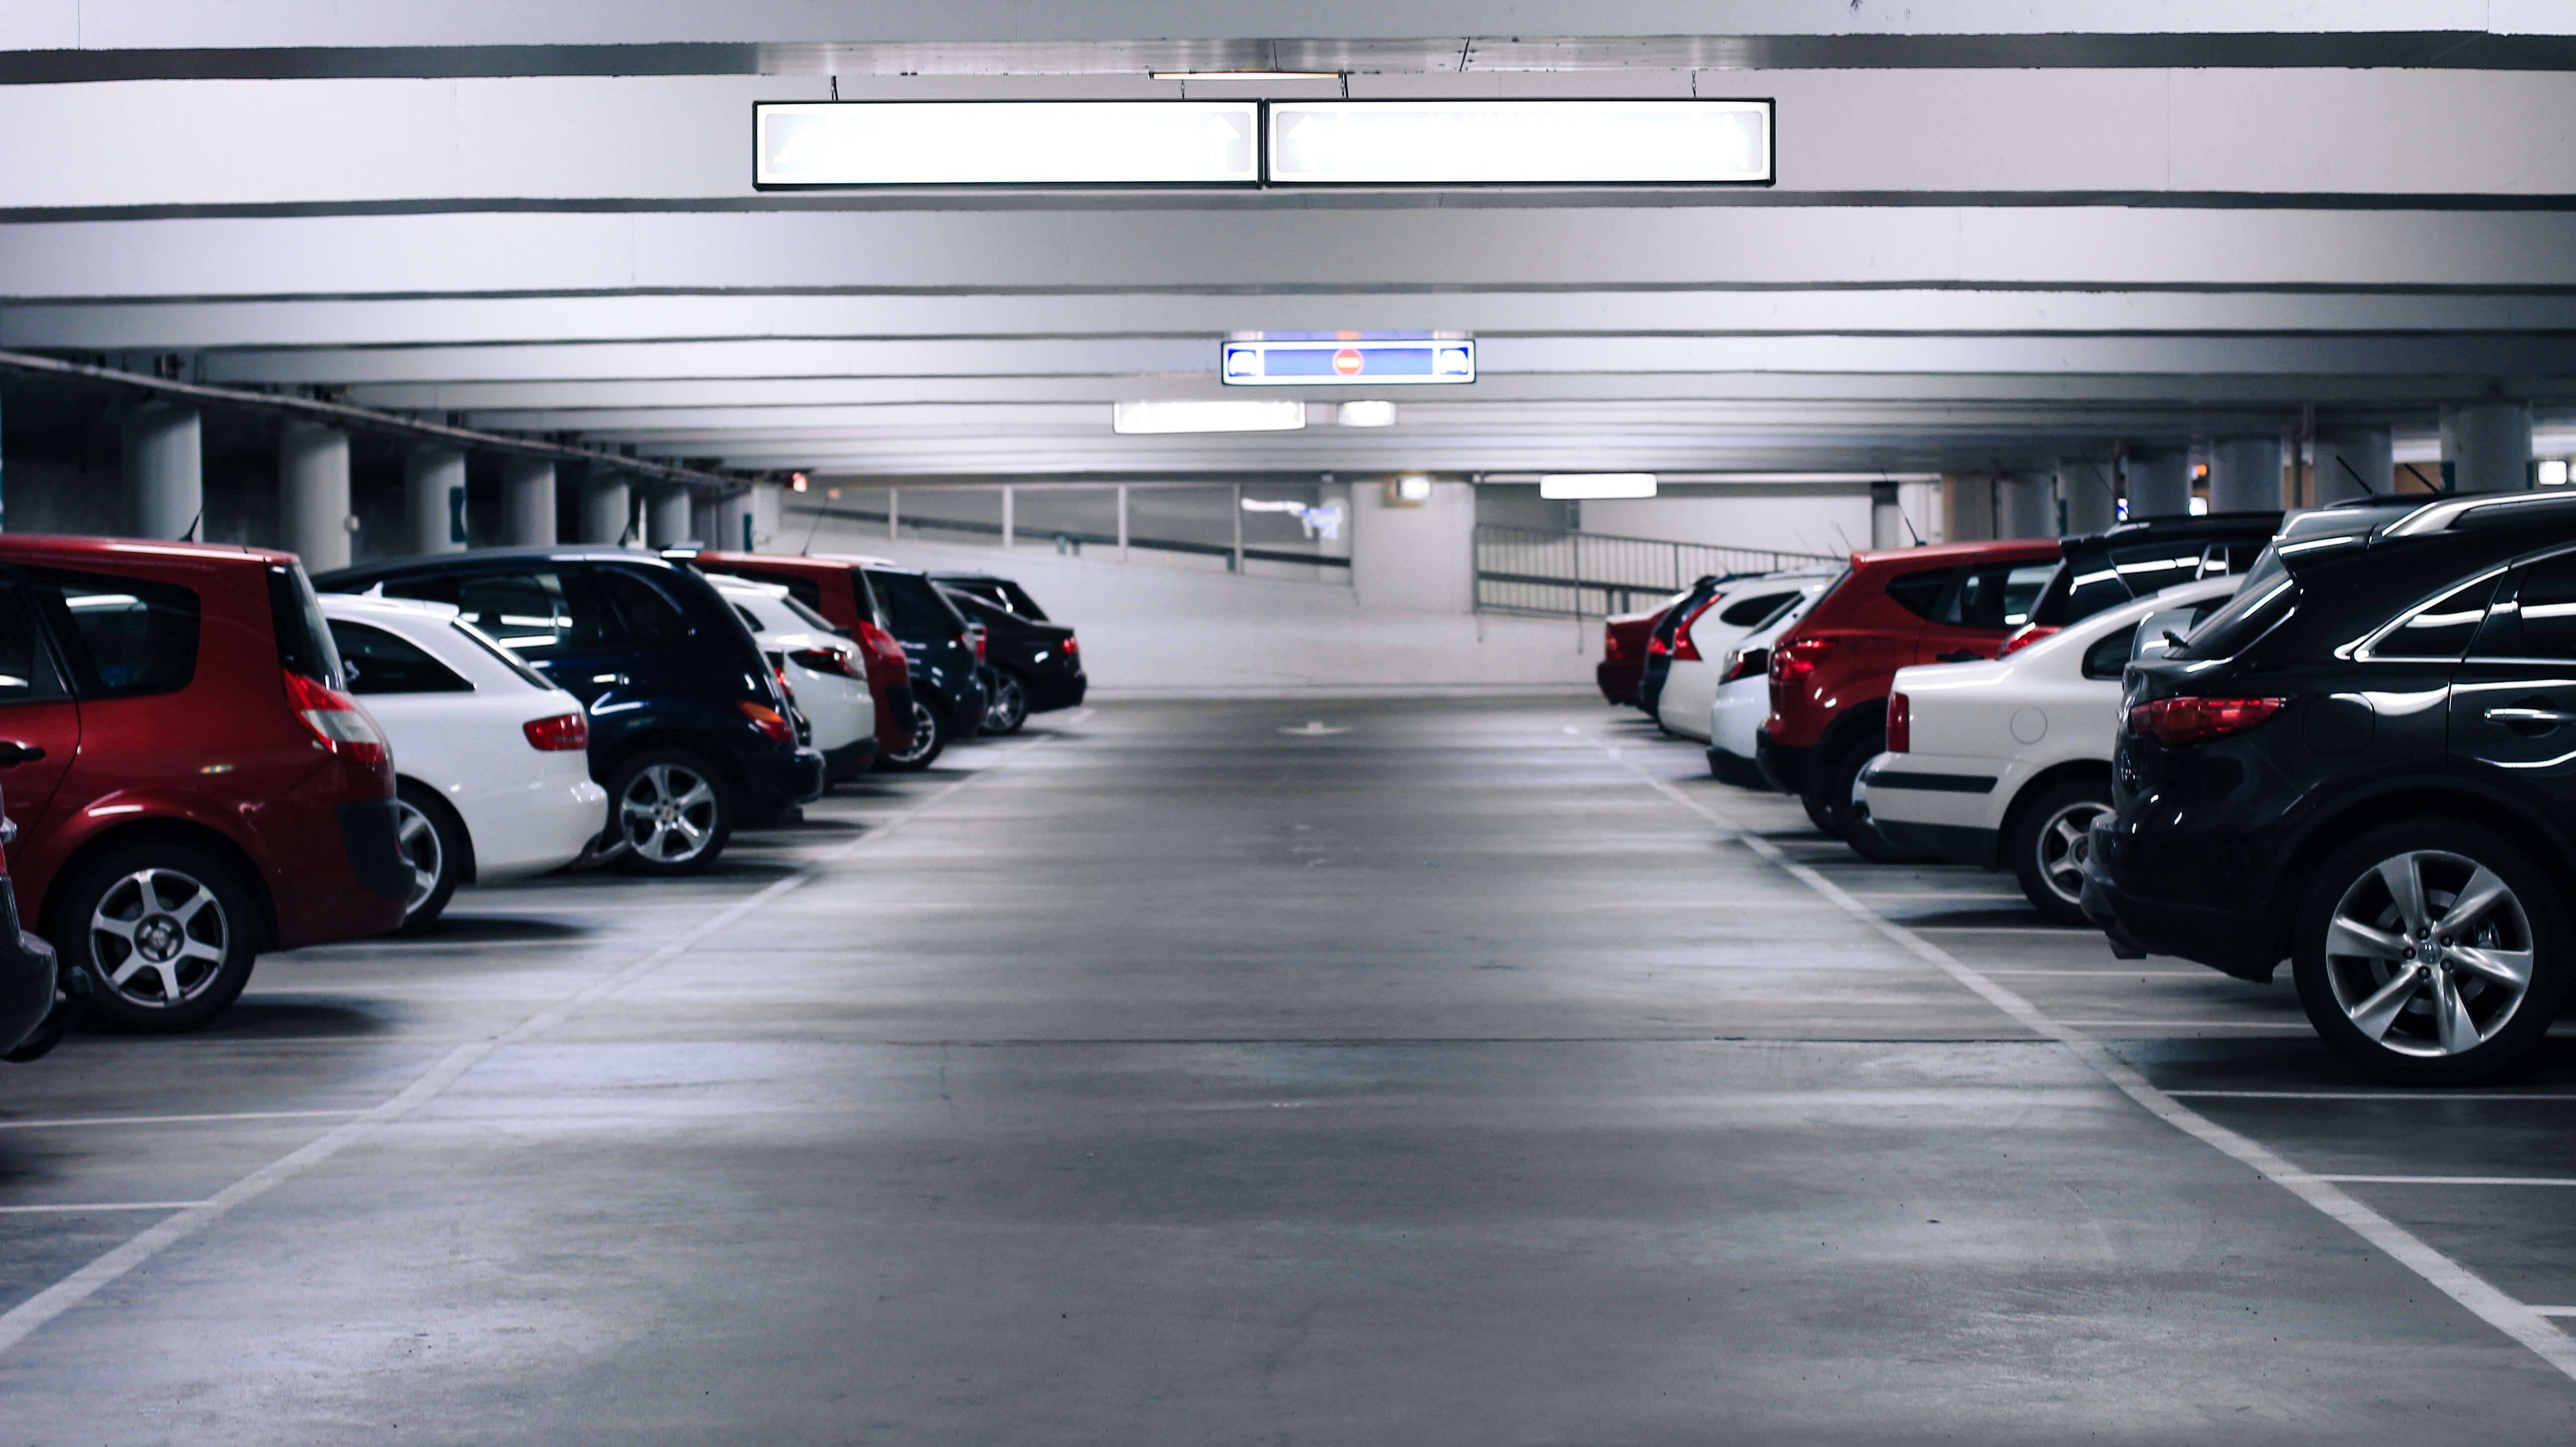 Parking lot | Source: Shutterstock